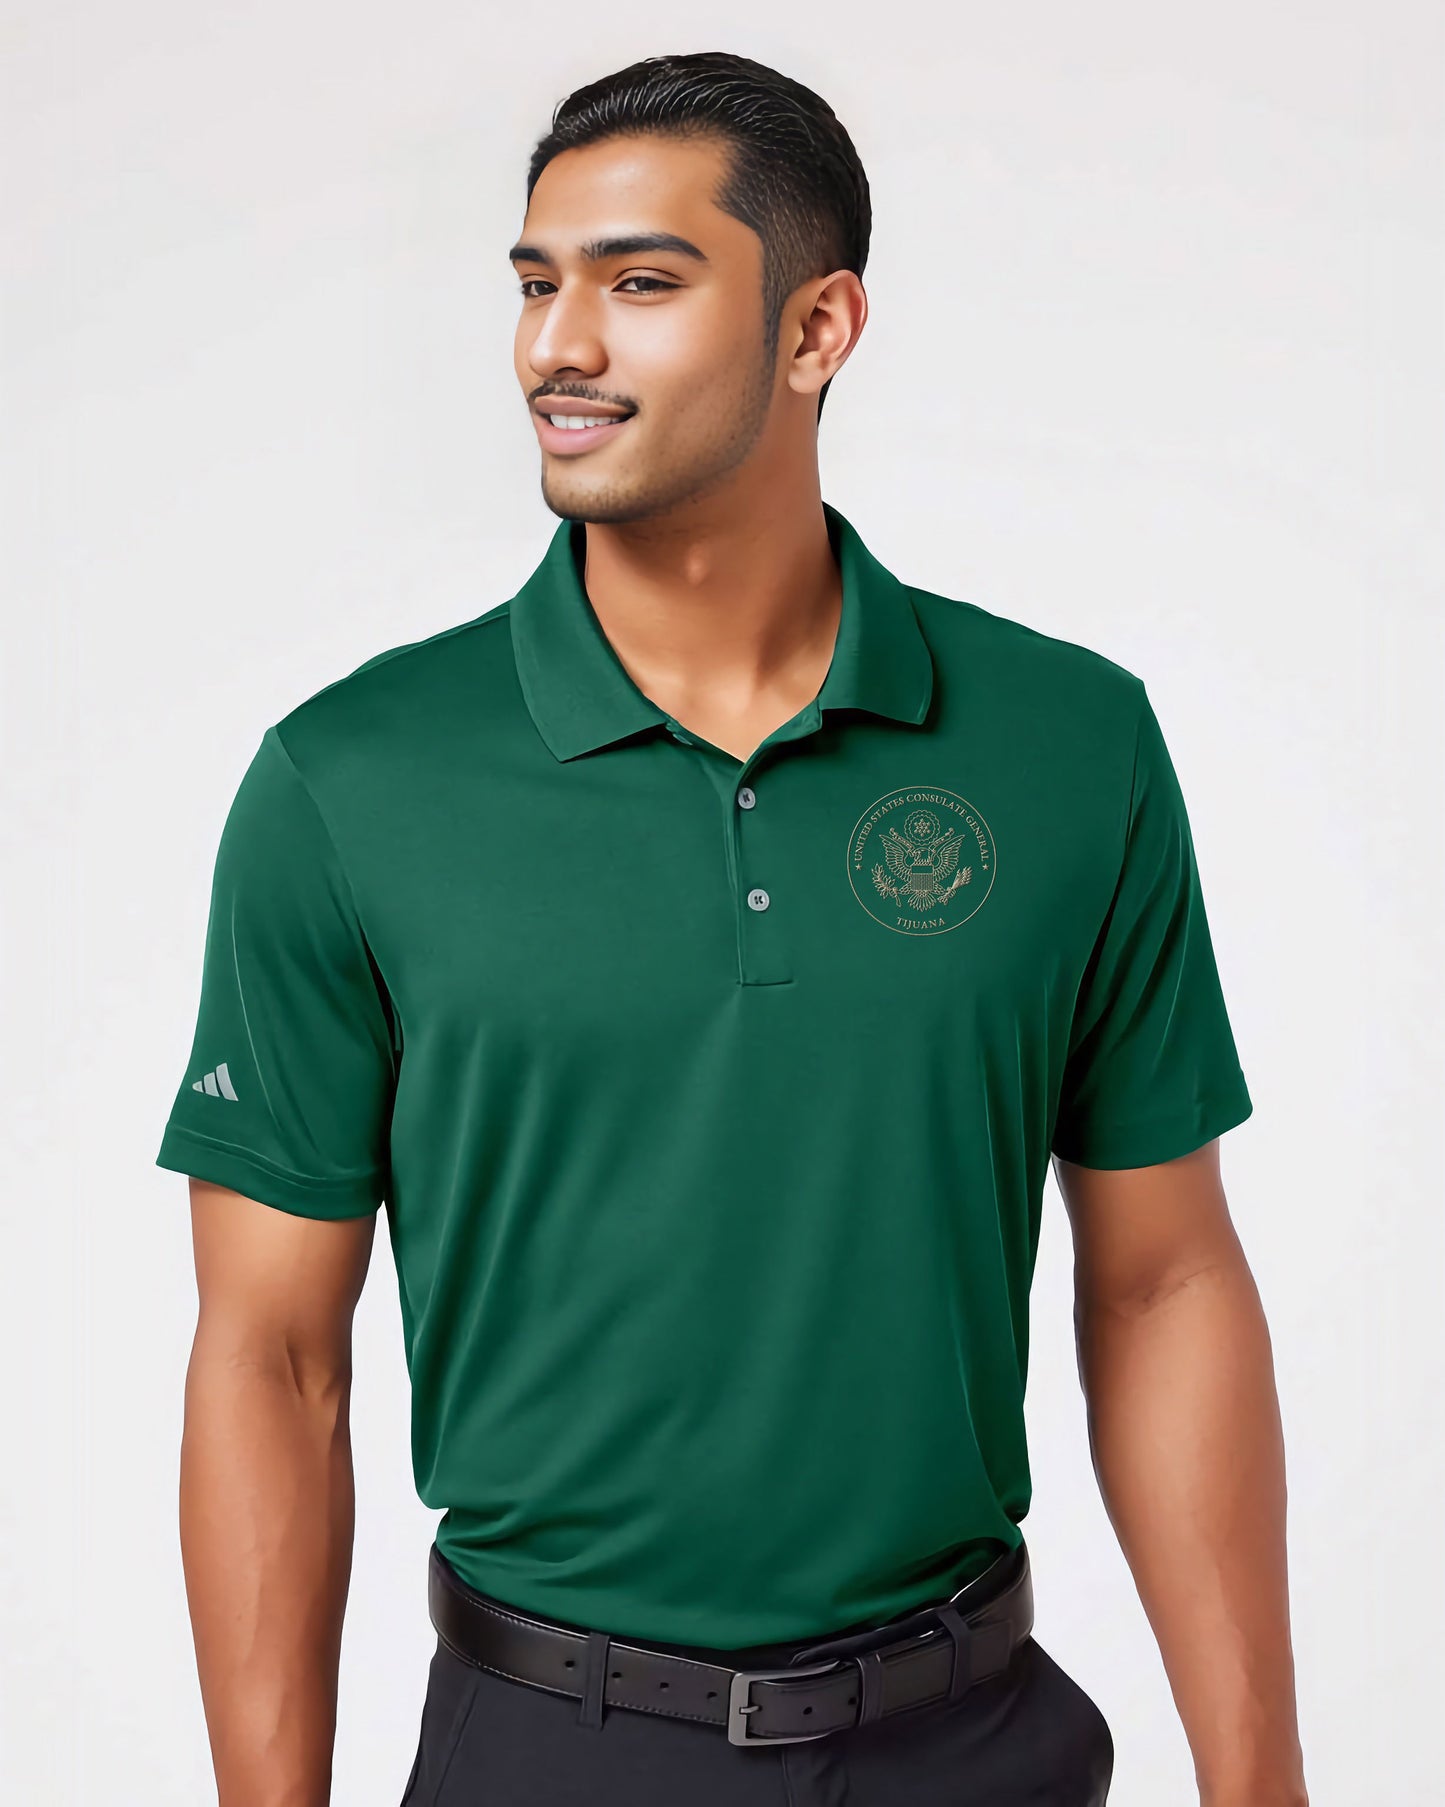 Adidas® Embroidered Polo, Gold Seal: Tijuana